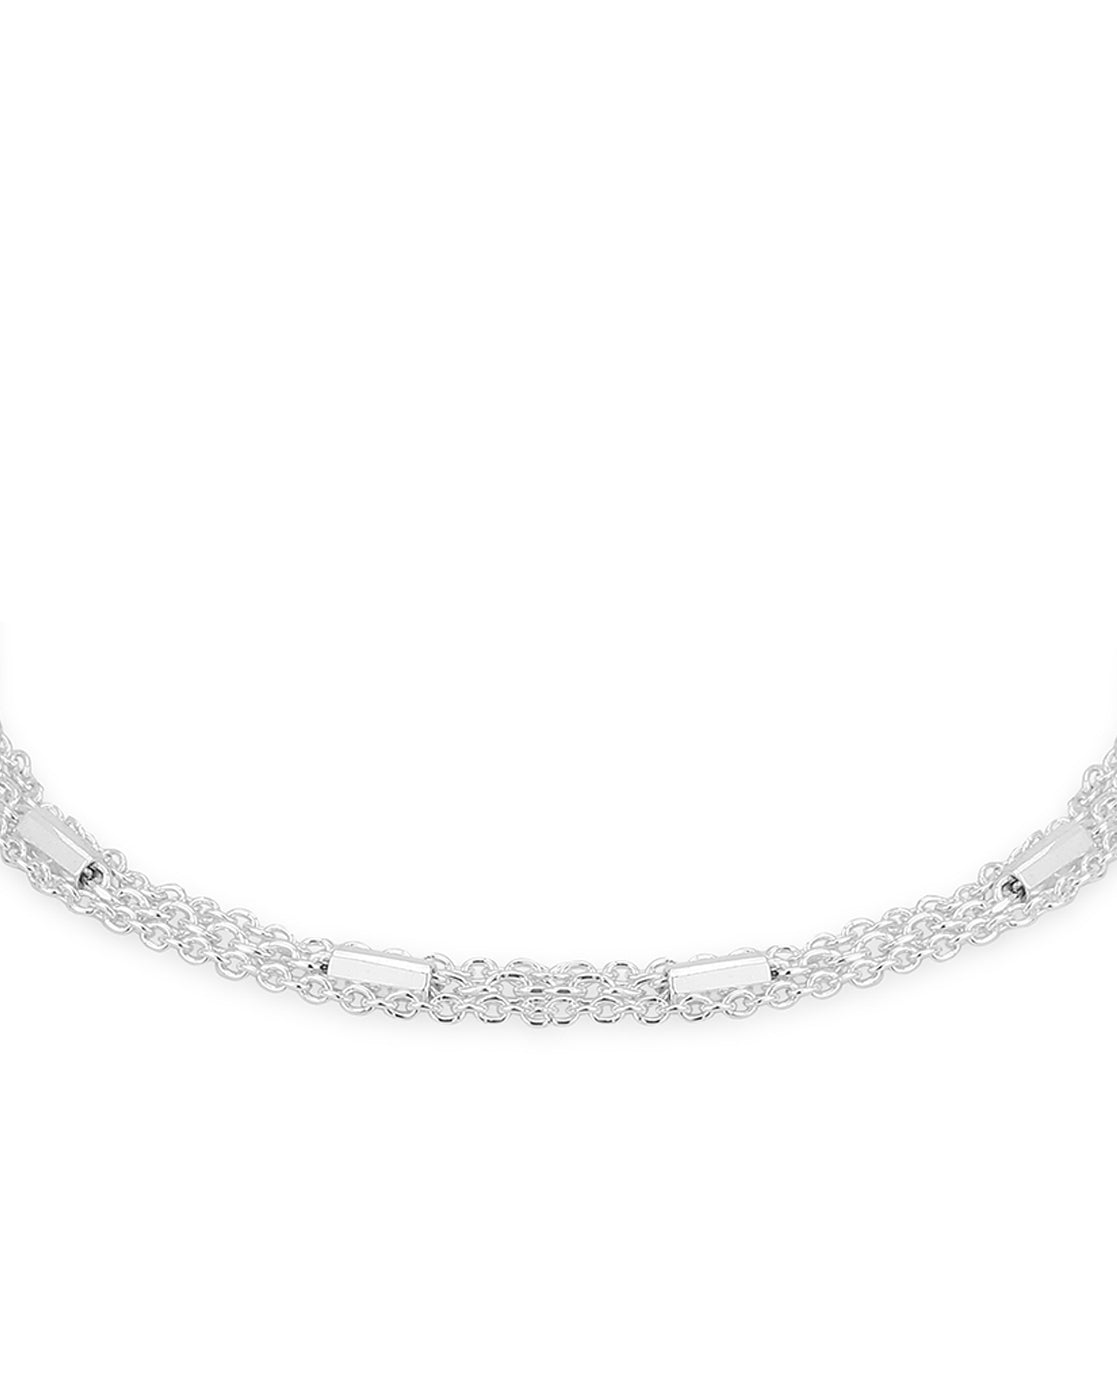 Carlton London 925 Sterling Silver Silver Rhodium Plated  Multistranded Bracelet